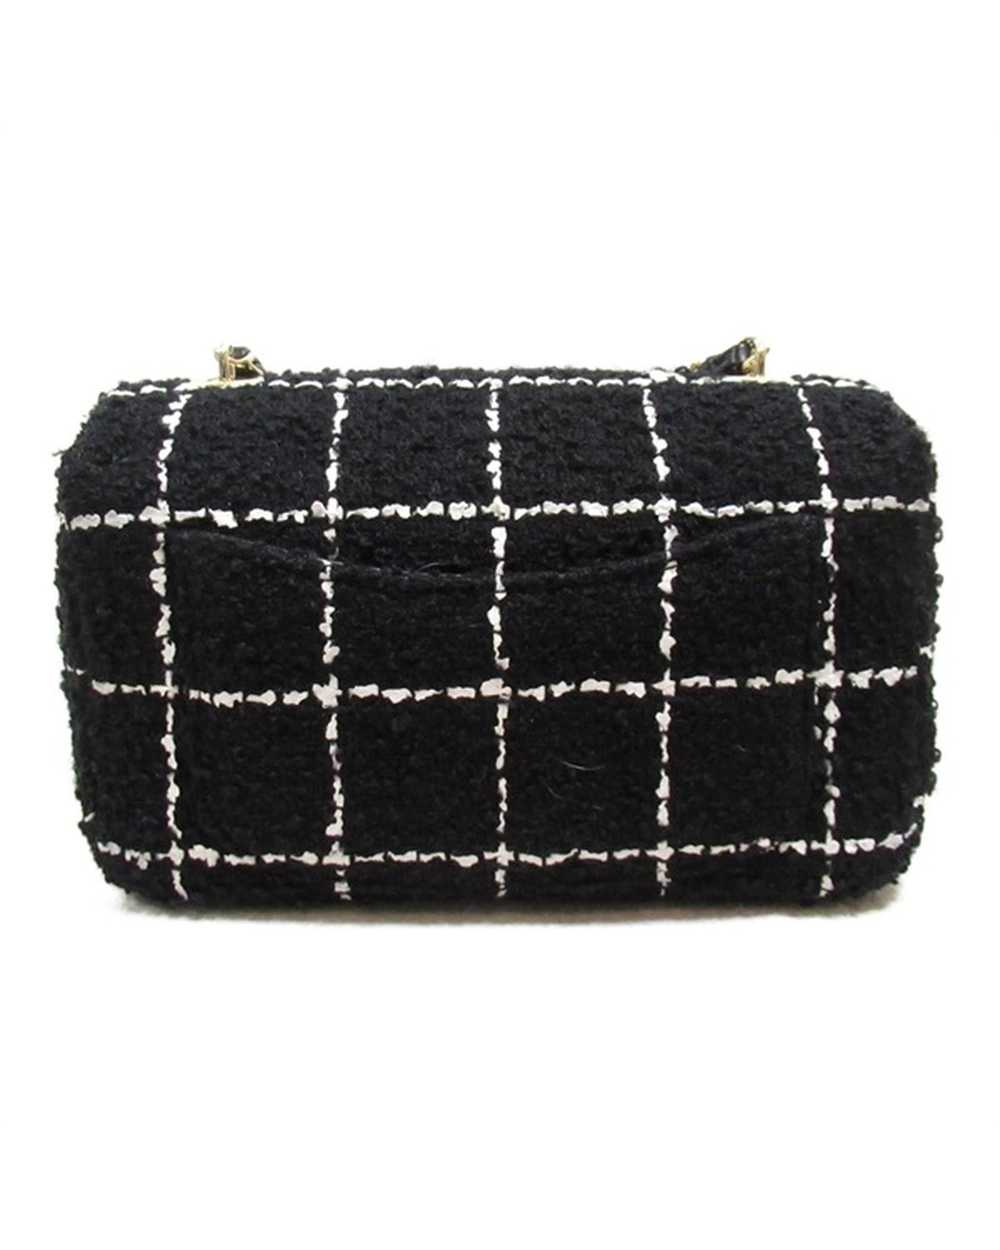 Chanel Chanel Tweed Camellia Flap Bag in Excellen… - image 2